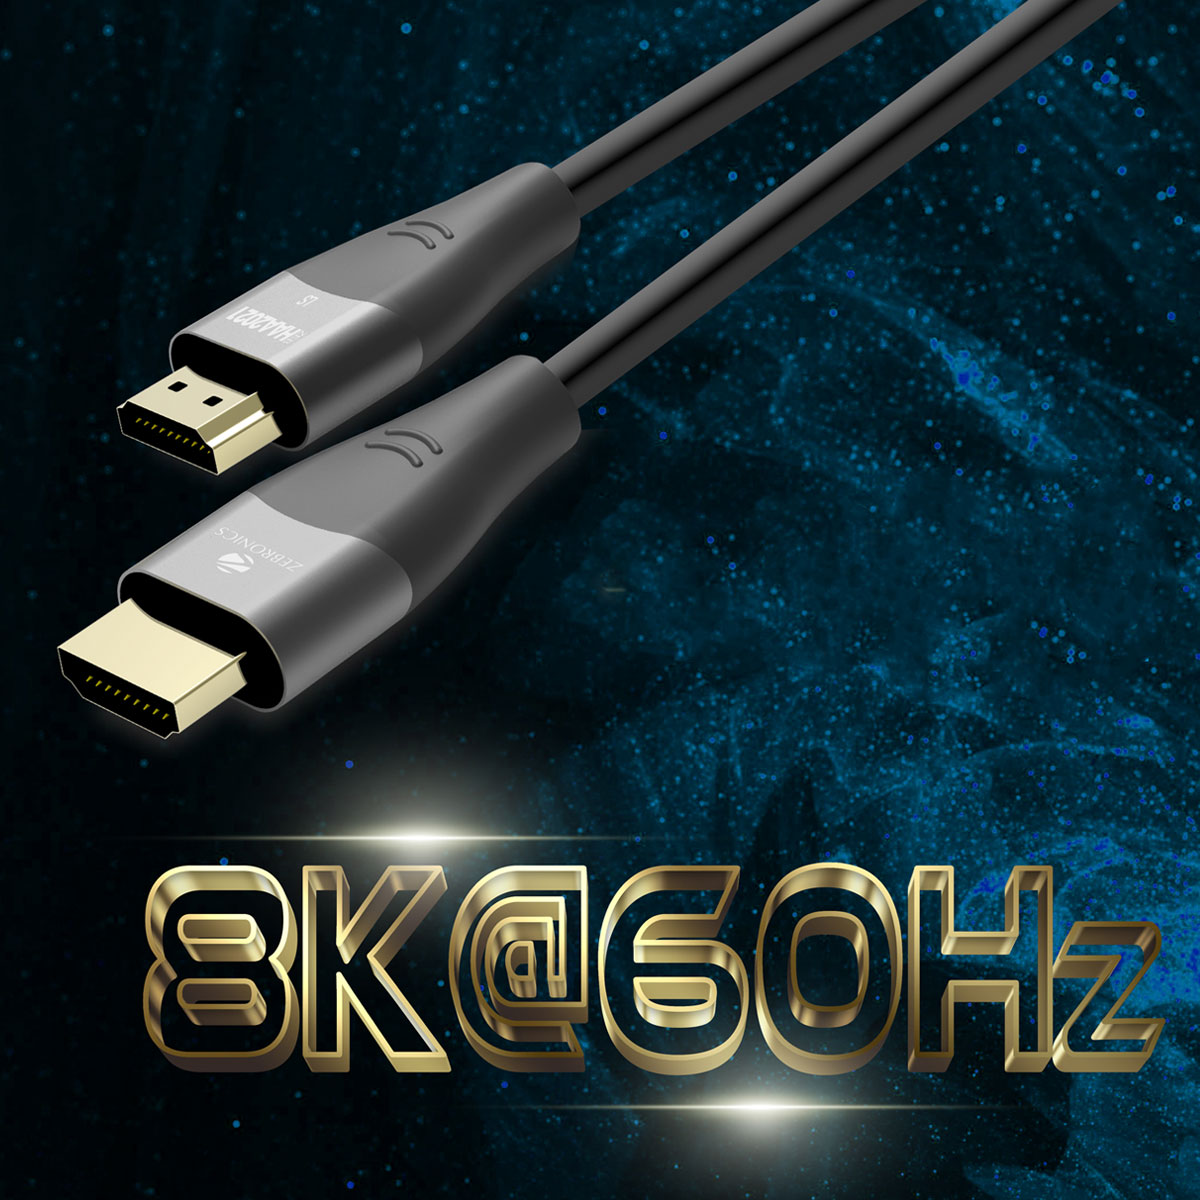 ZEB-HAA2021 - HDMI Cable - Zebronics